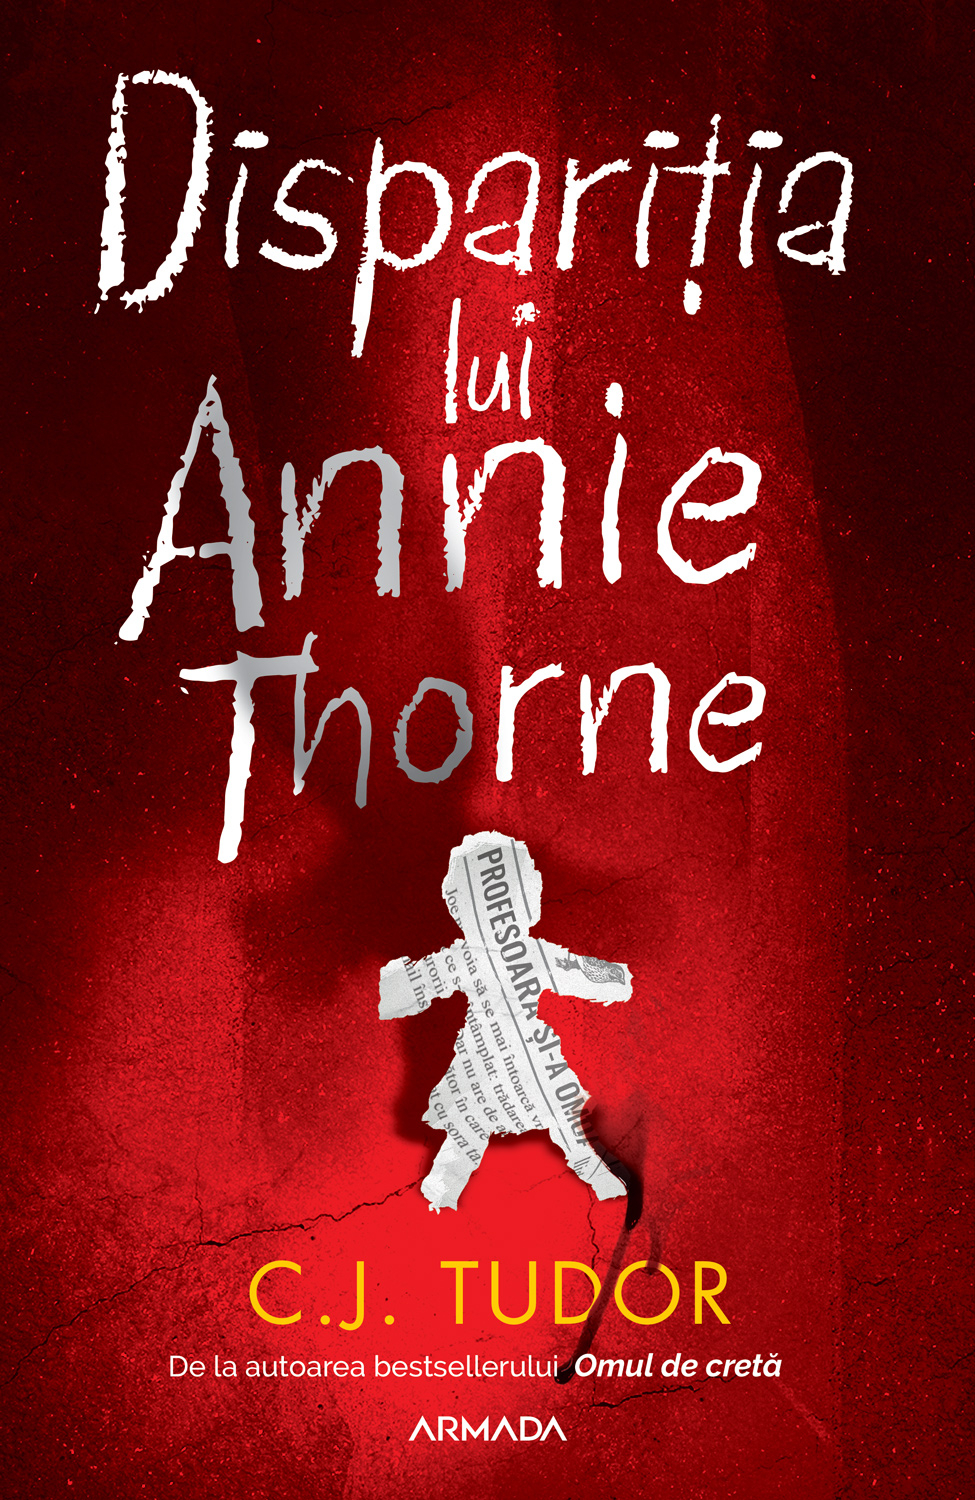 eBook Disparitia lui Annie Thorne - C.J. Tudor